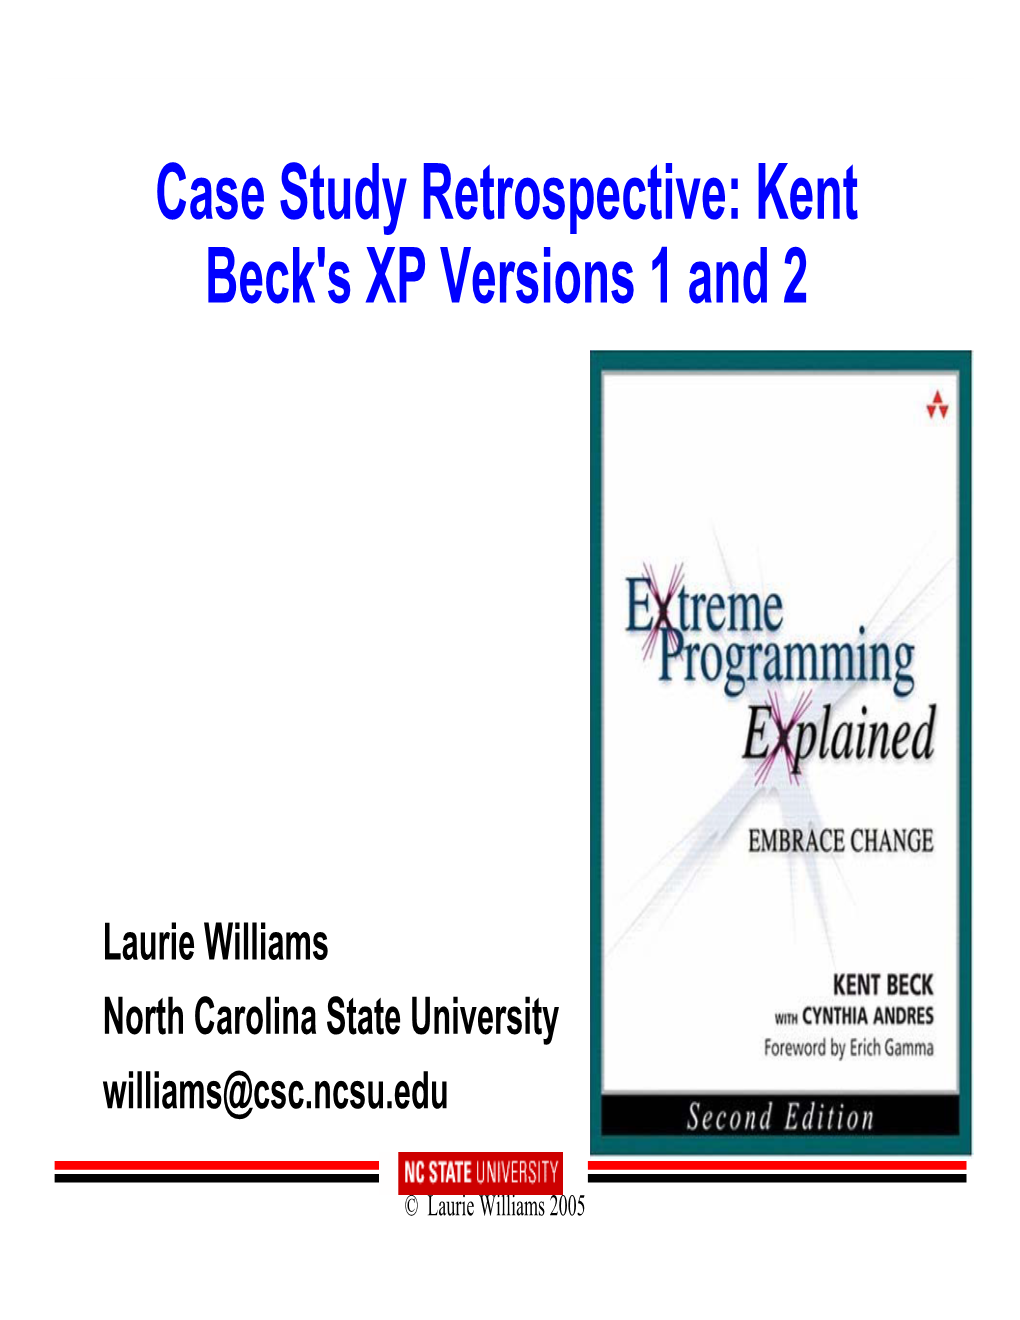 Case Study Retrospective: Kent Beck's XP Versions 1 and 2